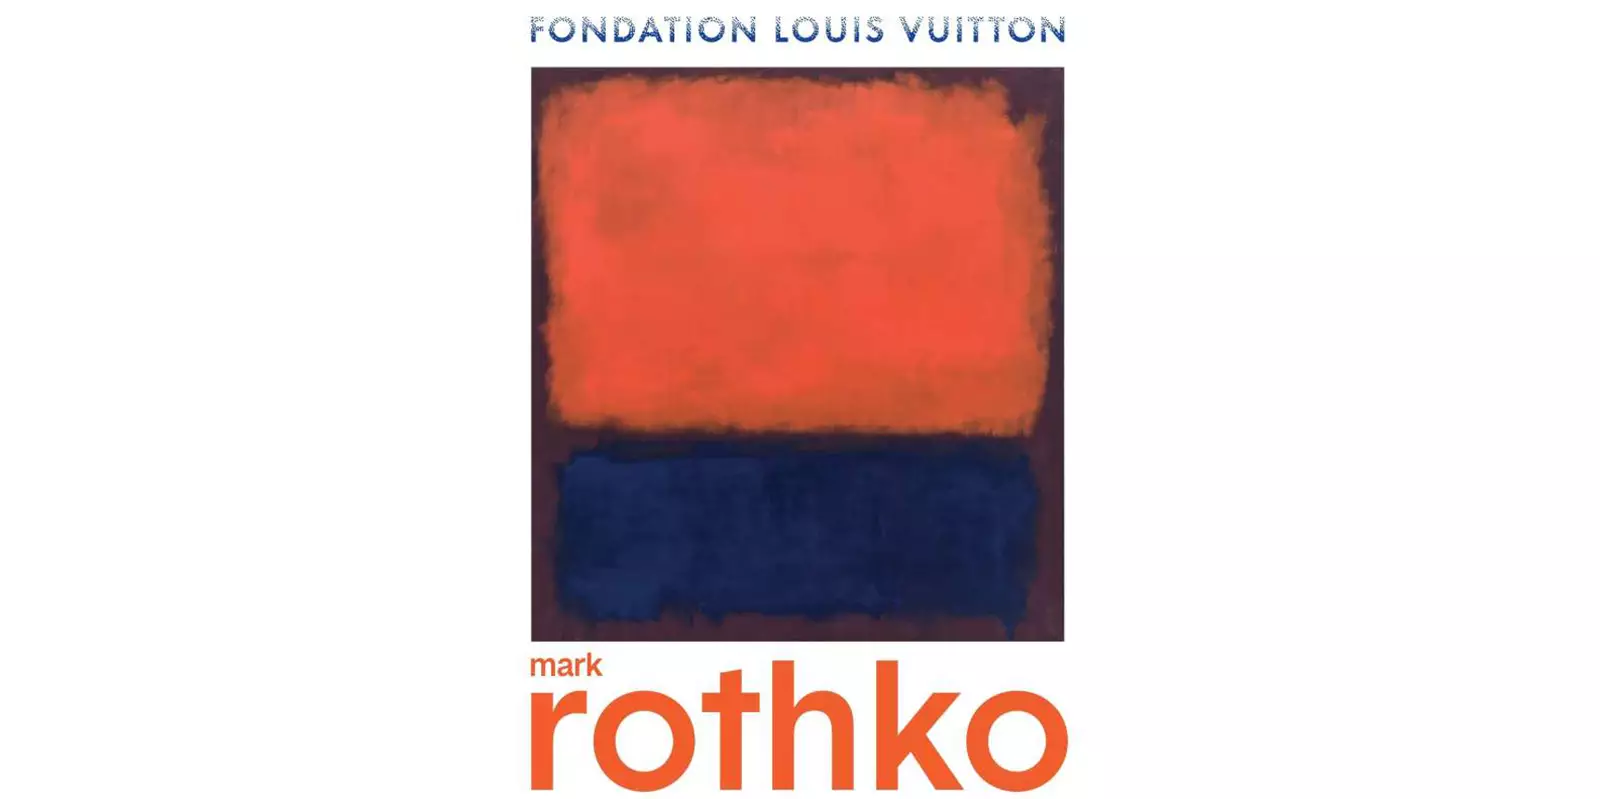 Mark Rothko's enigmatic canvases illuminate the Fondation Louis Vuitton